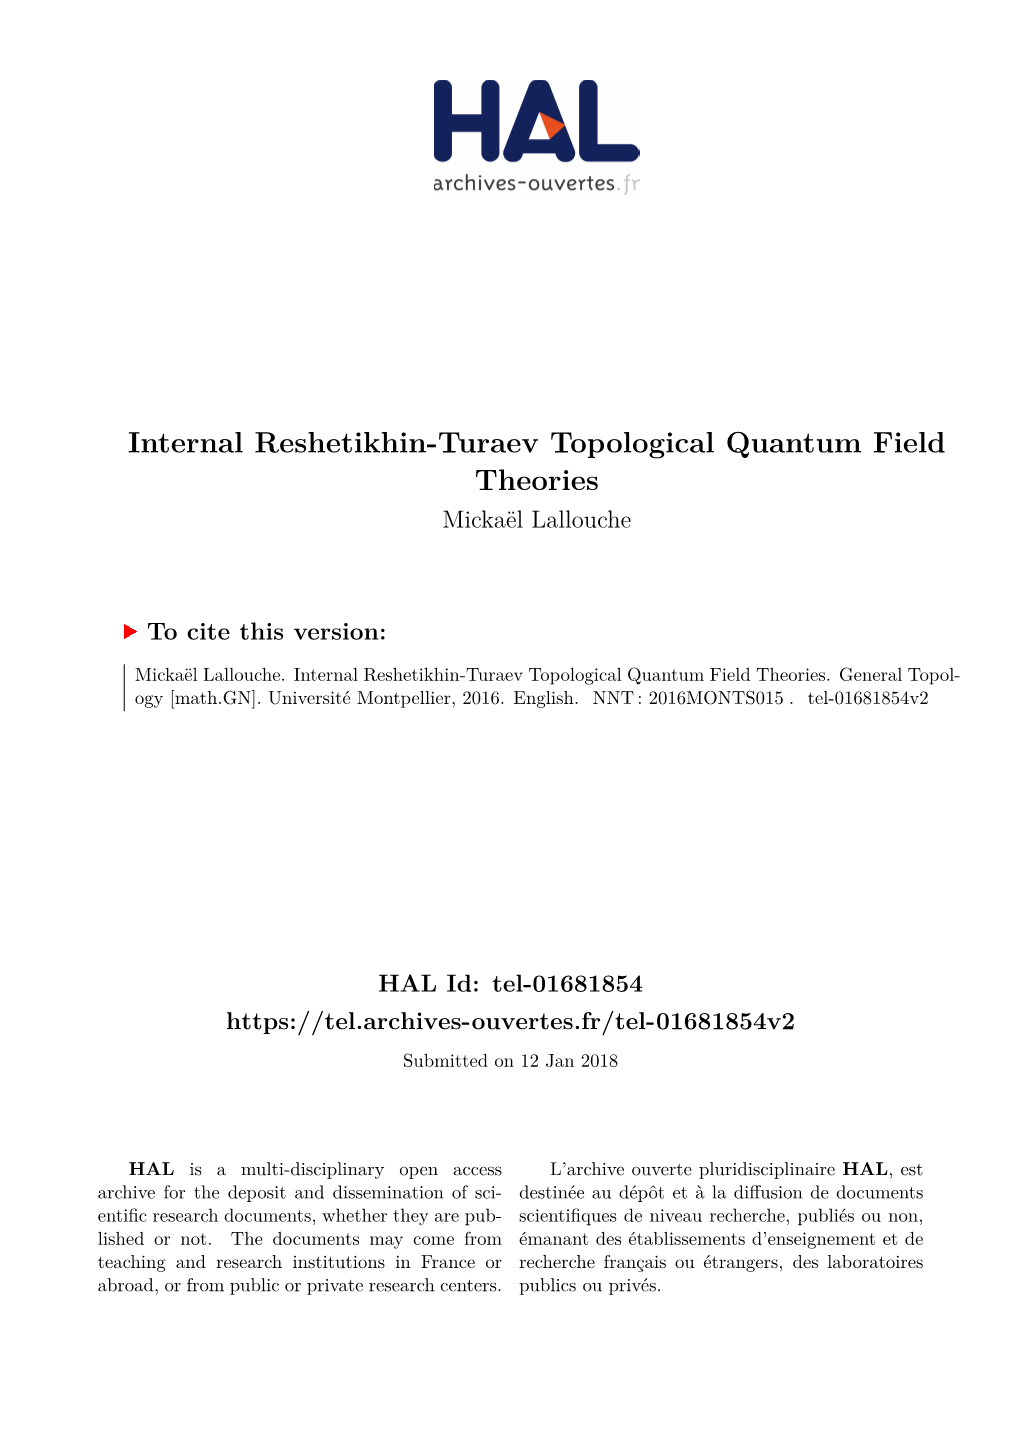 Internal Reshetikhin-Turaev Topological Quantum Field Theories Mickaël Lallouche